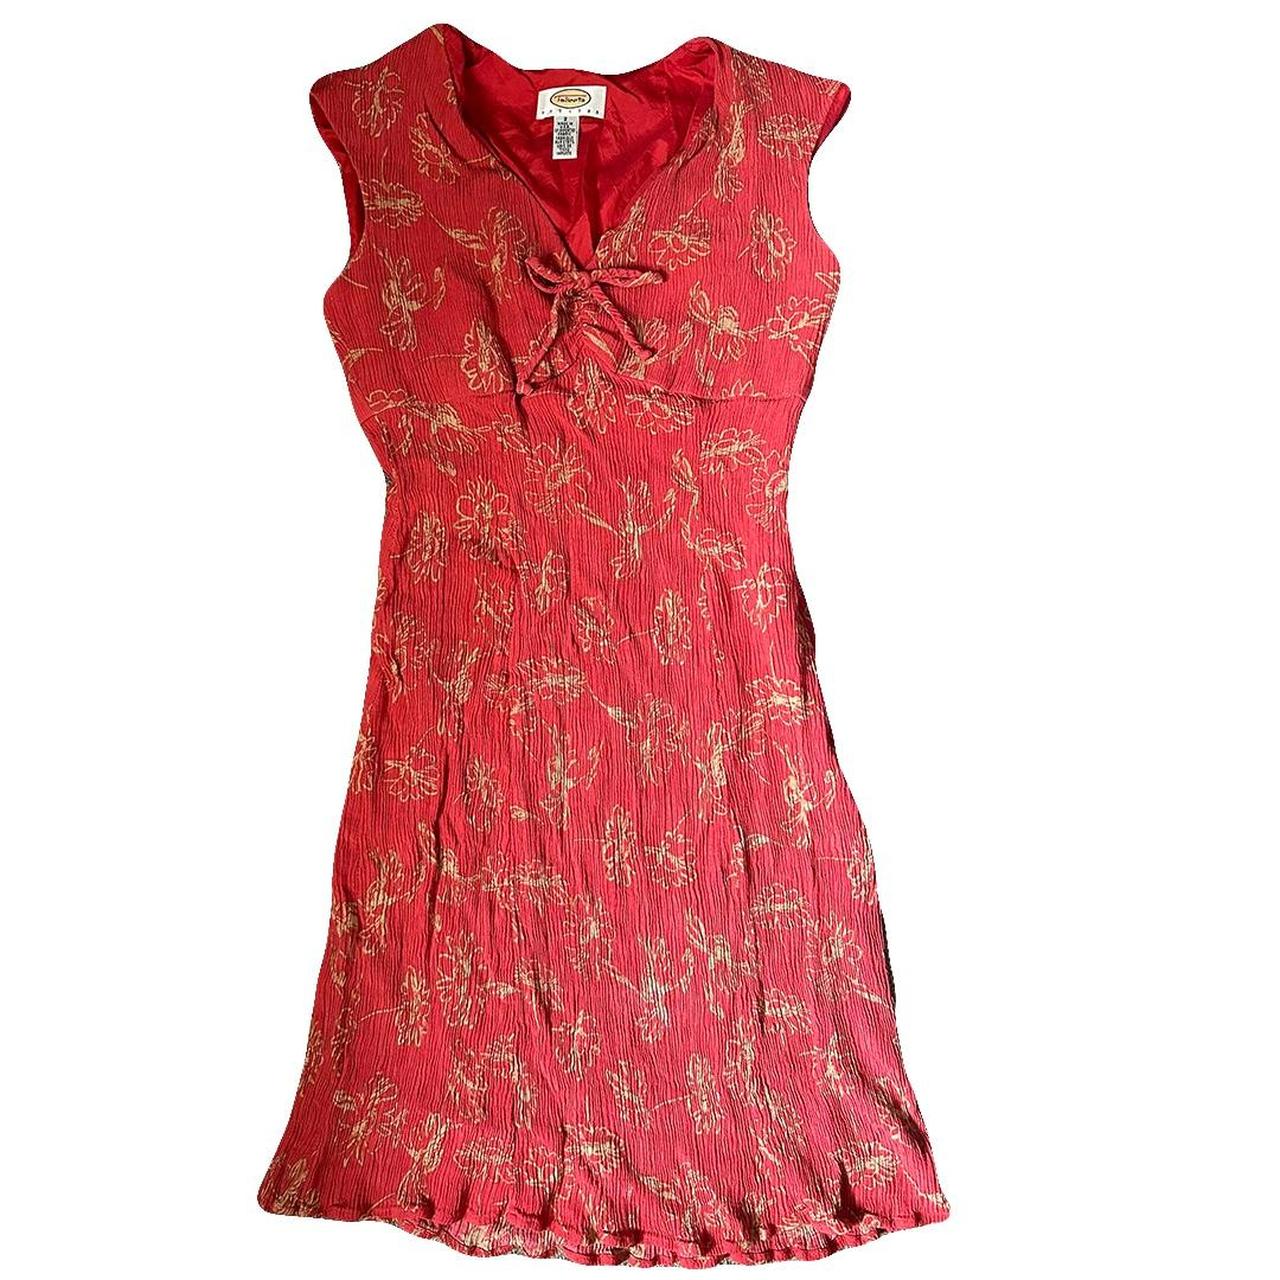 Talbots Women's Red Dress | Depop